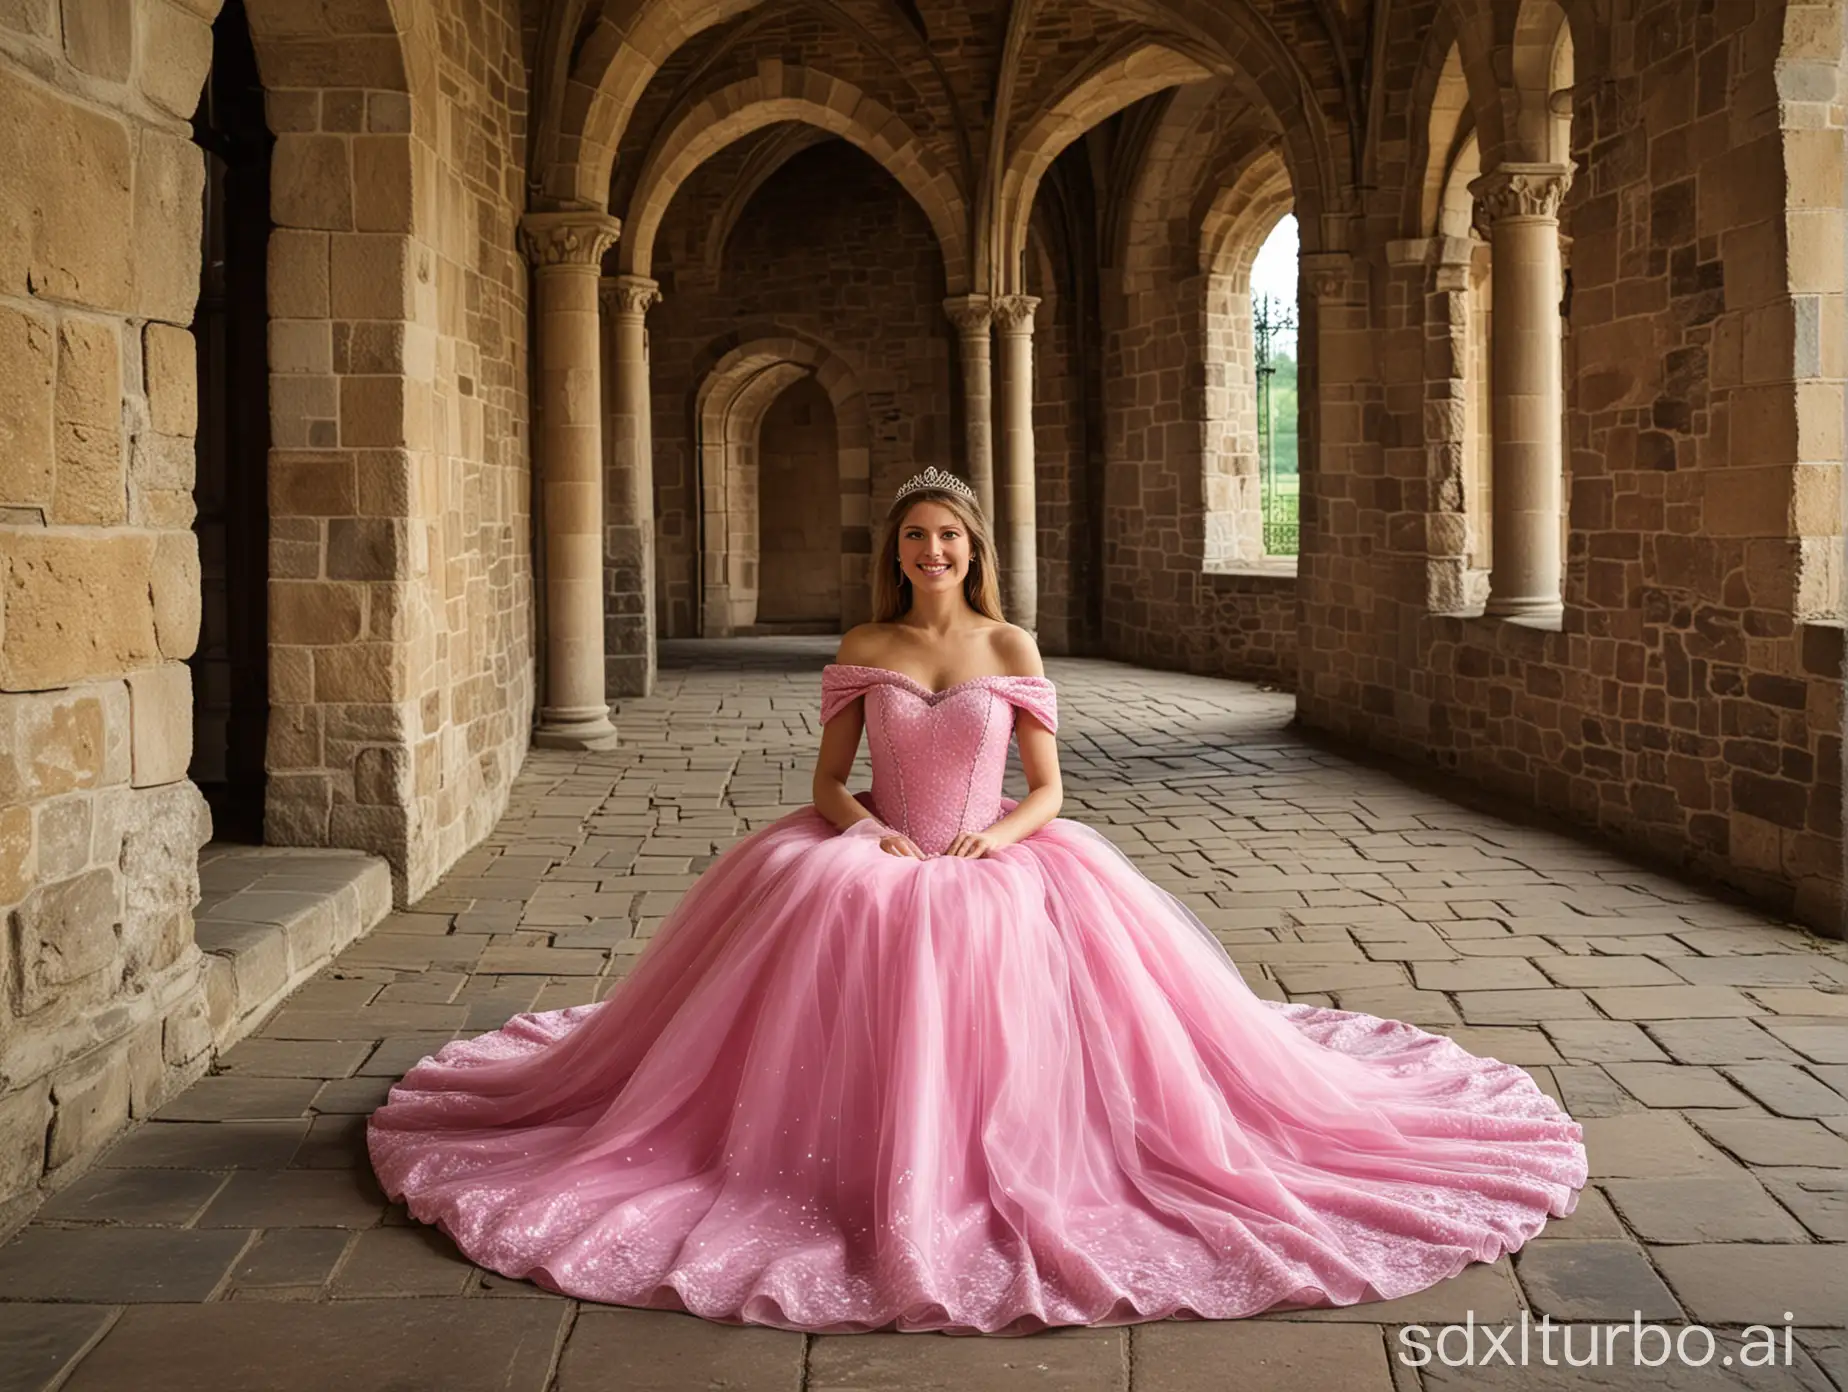 princess in the castle